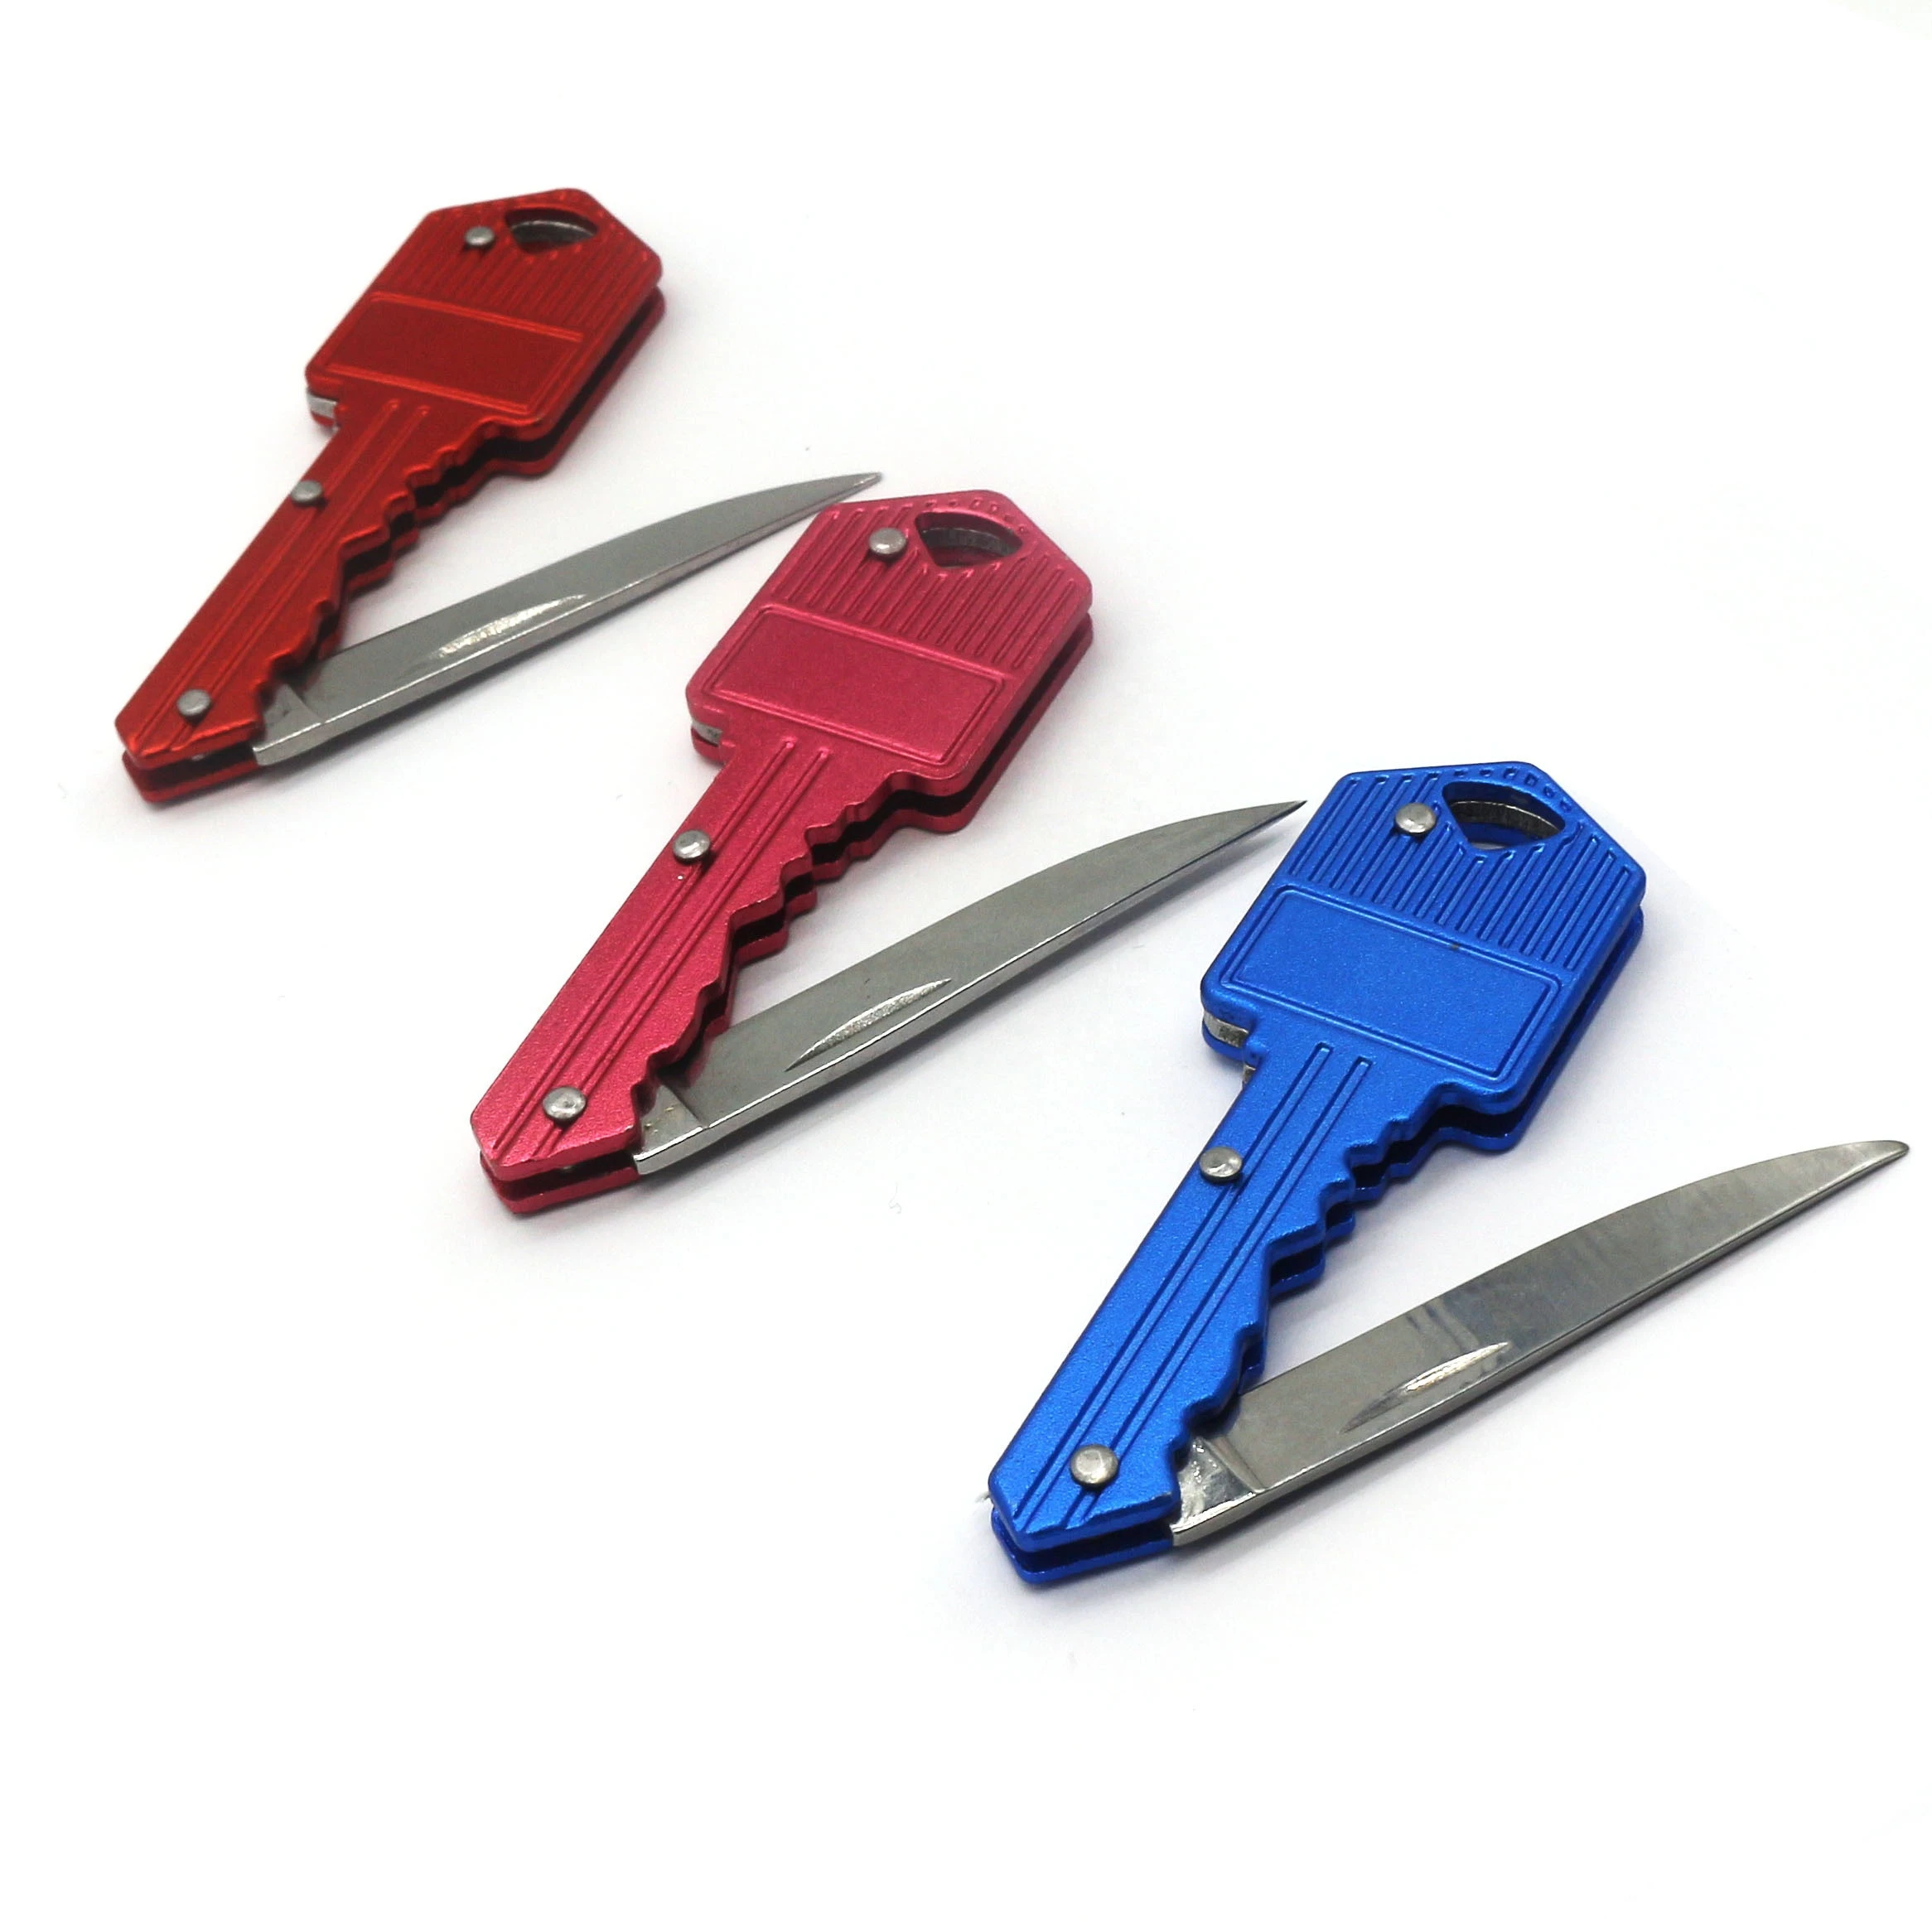 Wholesale utility key shape stainless steel pocket mini keychain key knife folding knife with self defense knifes